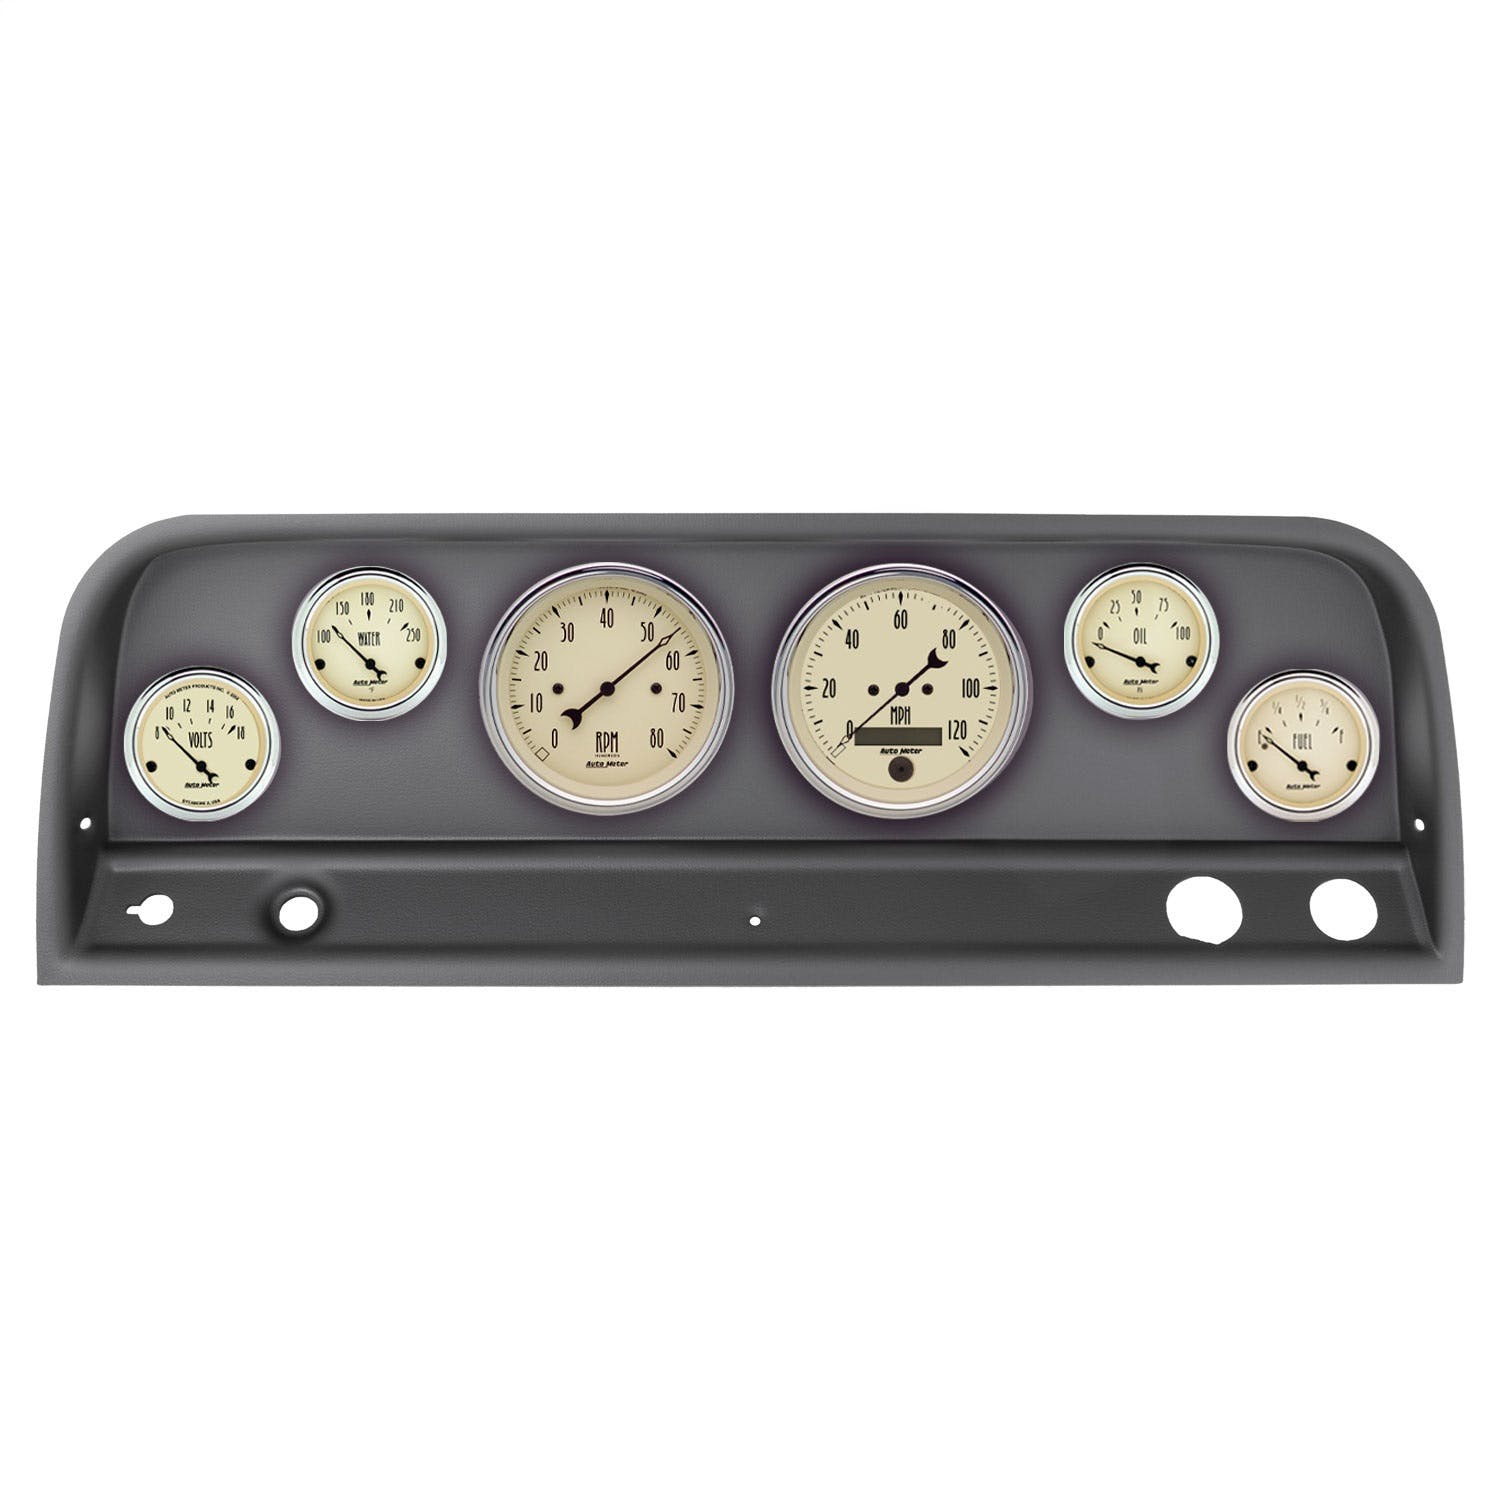 AutoMeter Products 2128-02 6 Gauge Direct-Fit Dash Kit, Chevy Truck 64-66, Antique Beige